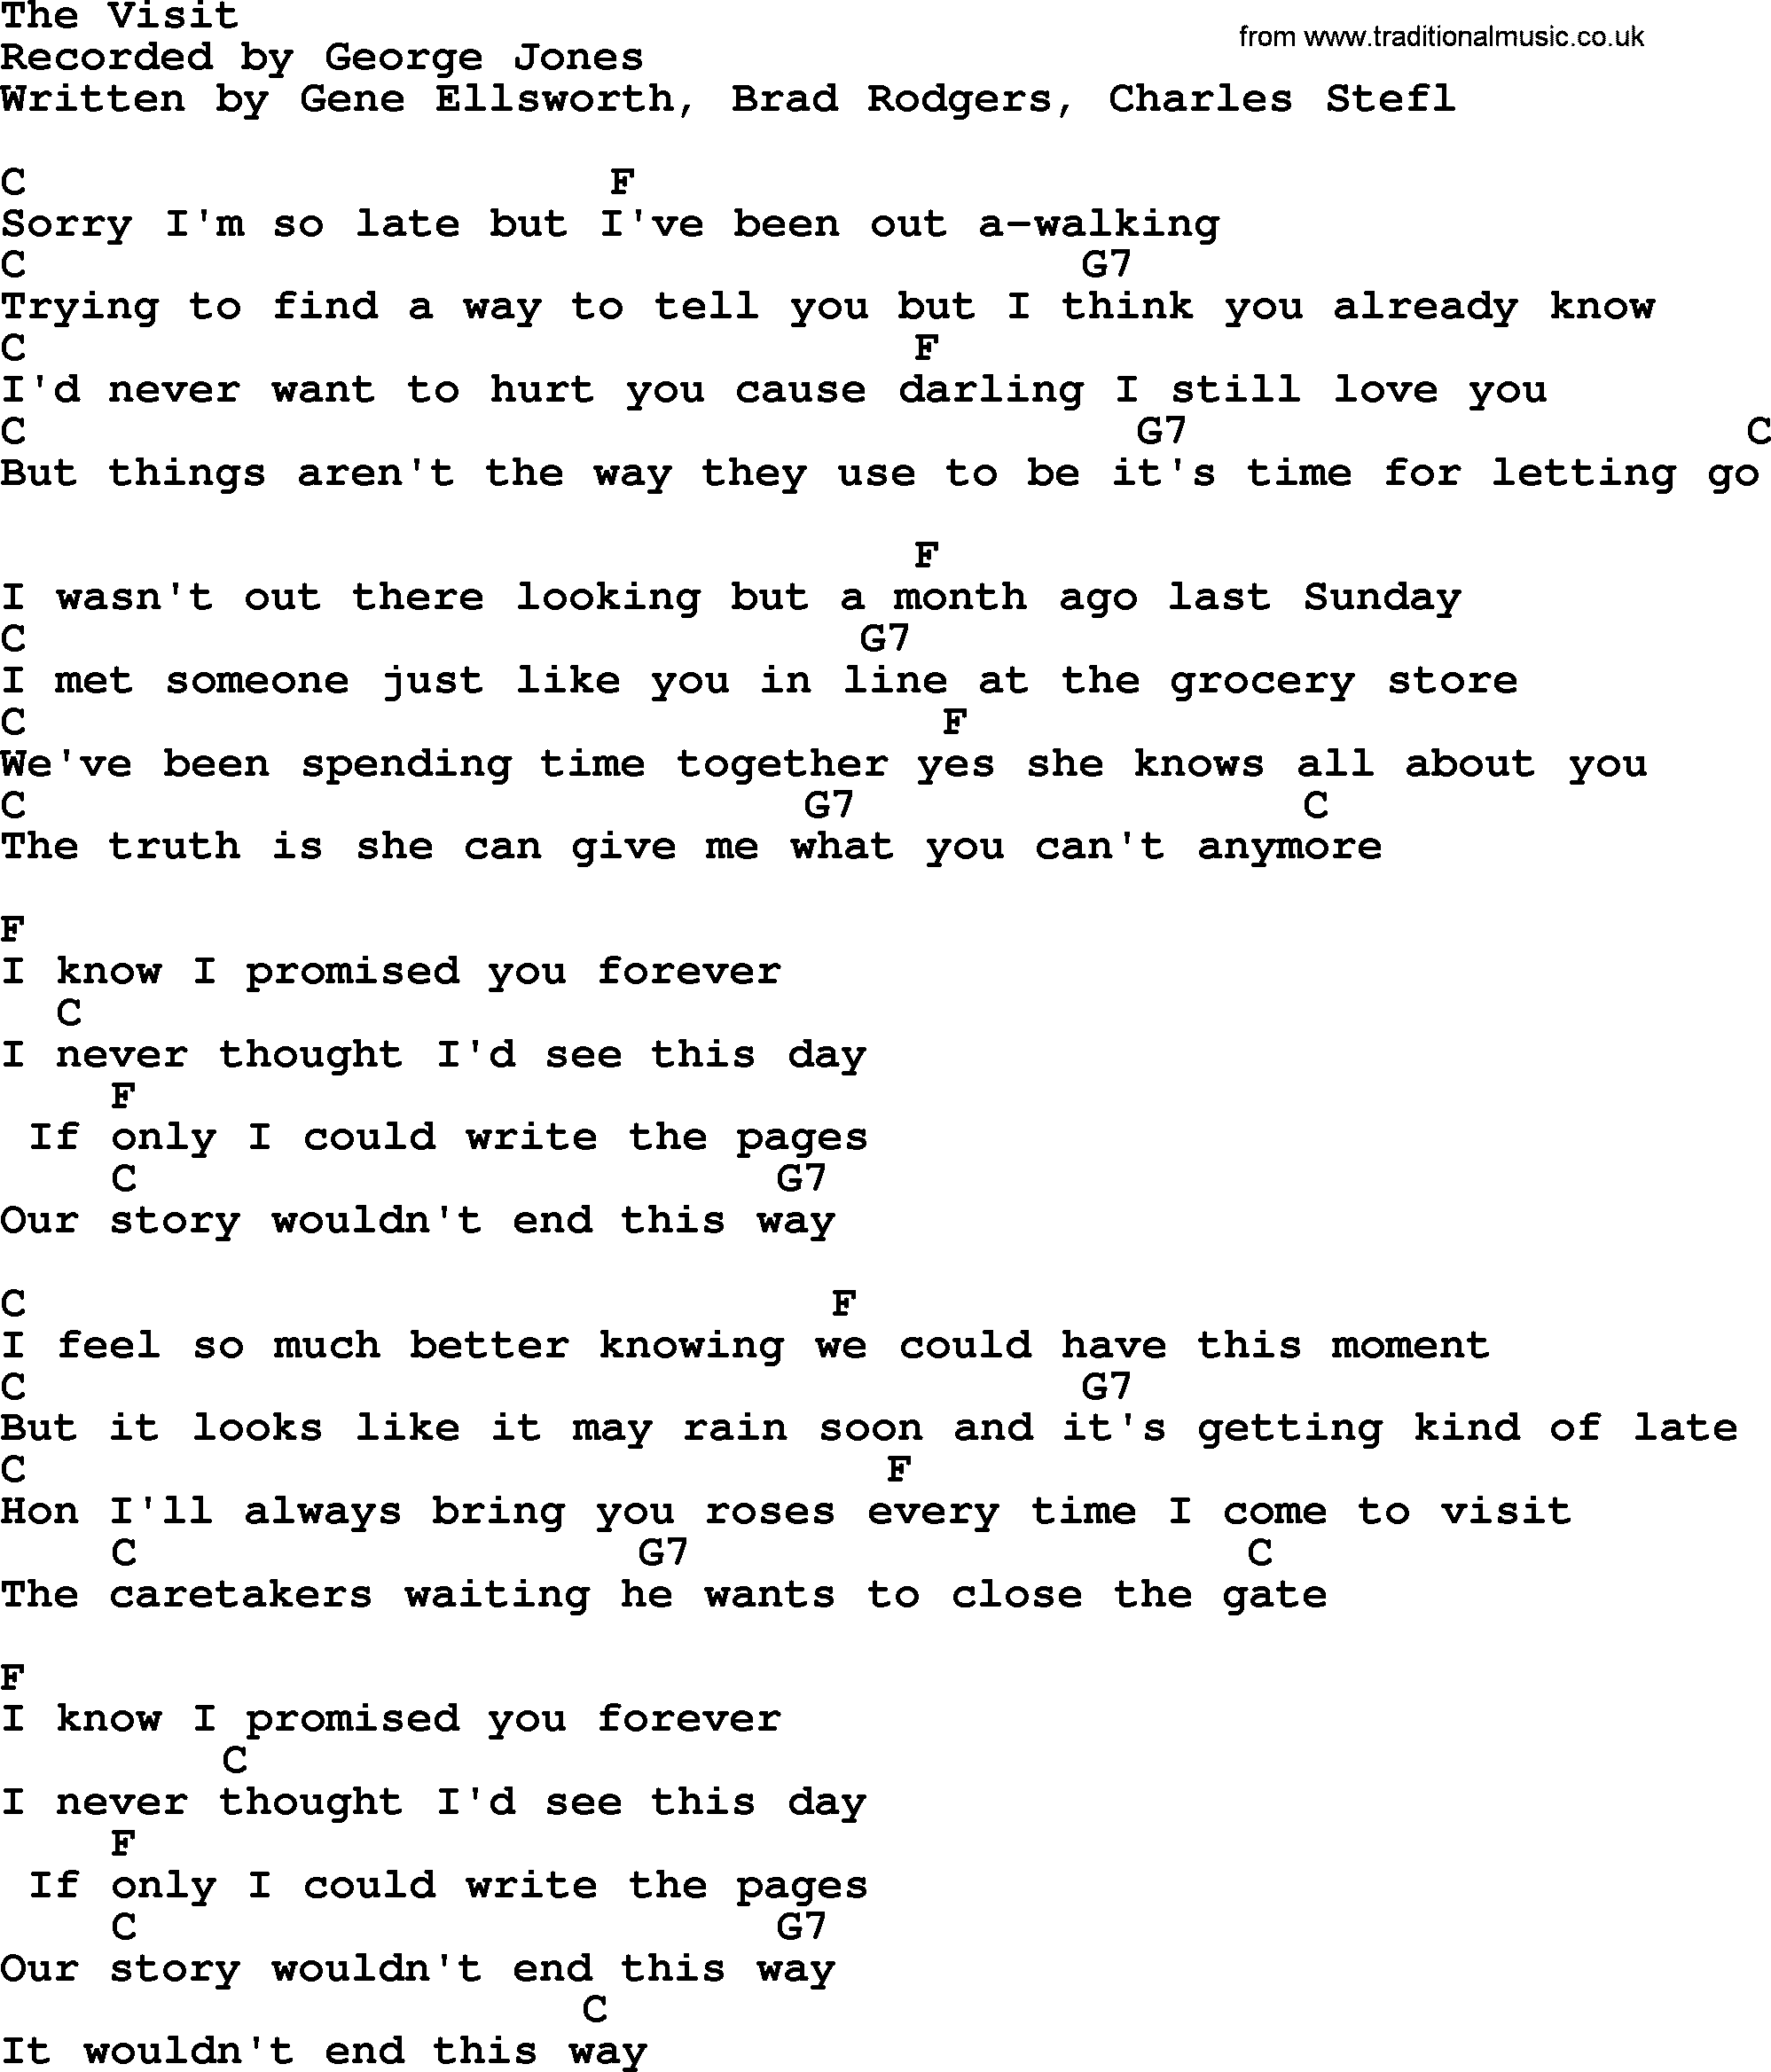 George Jones song: The Visit, lyrics and chords